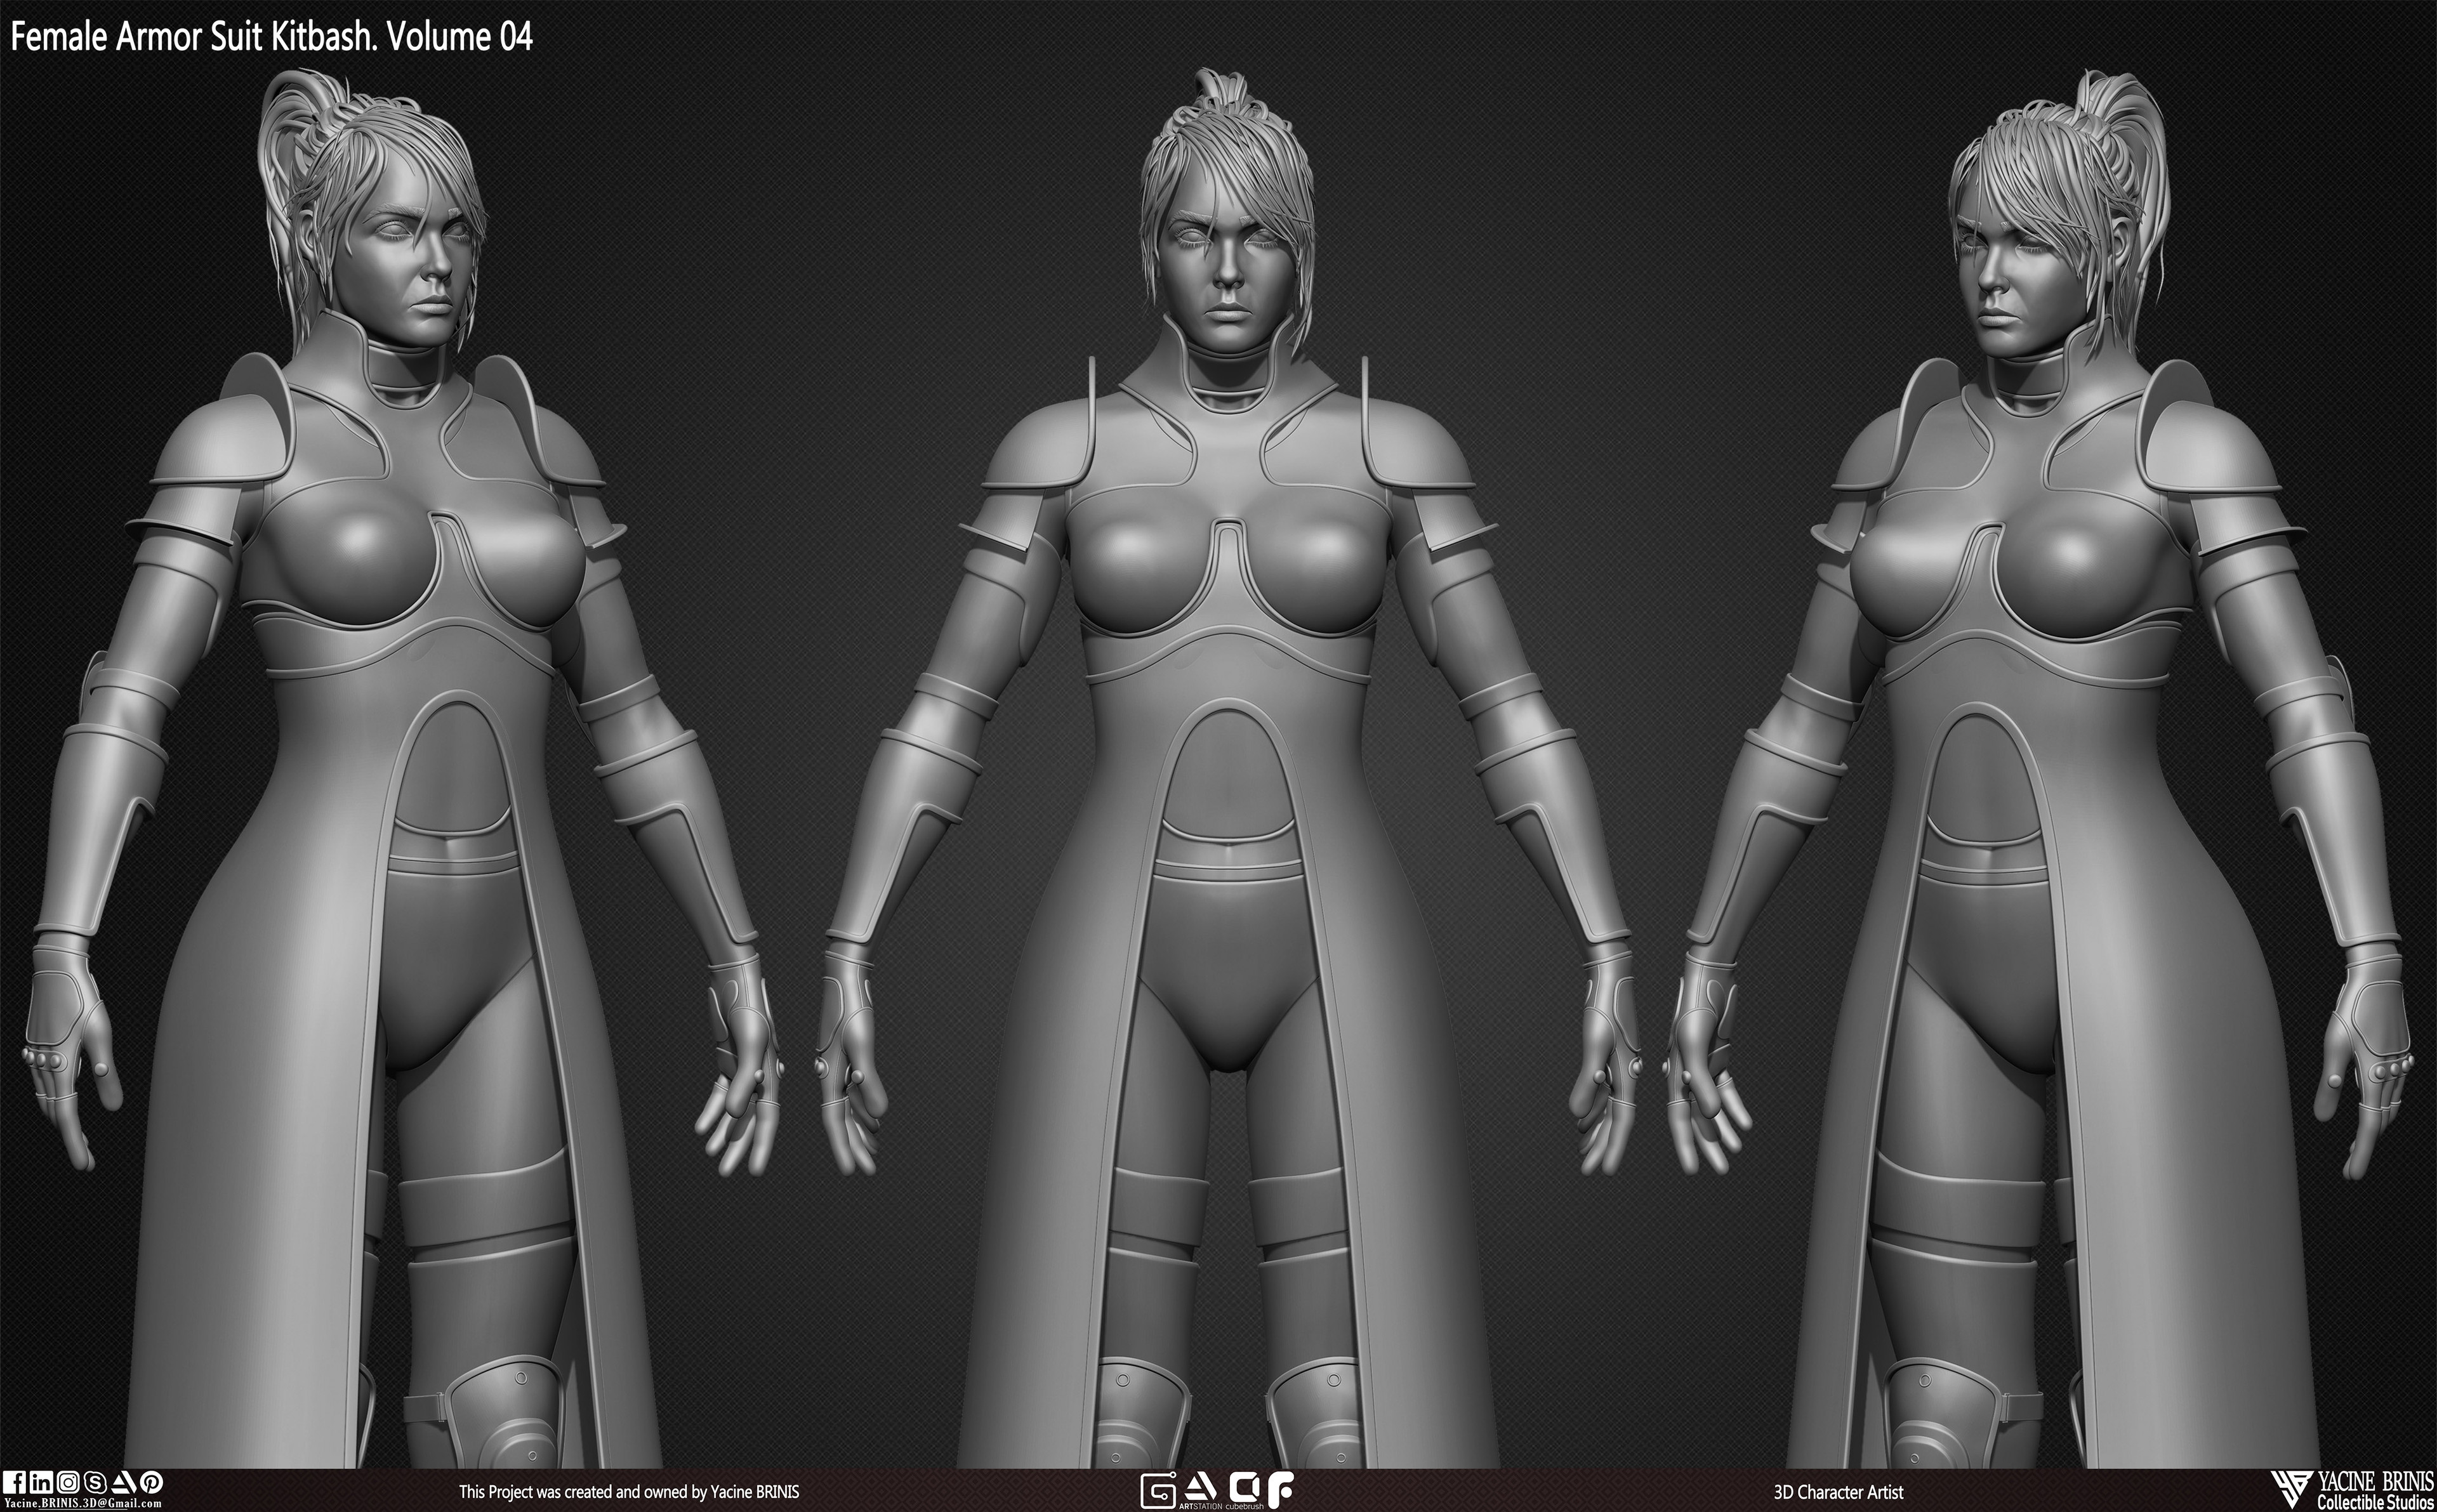 Female Armor Suit Kitbash Vol 04 sculpted By Yacine BRINIS Set 006